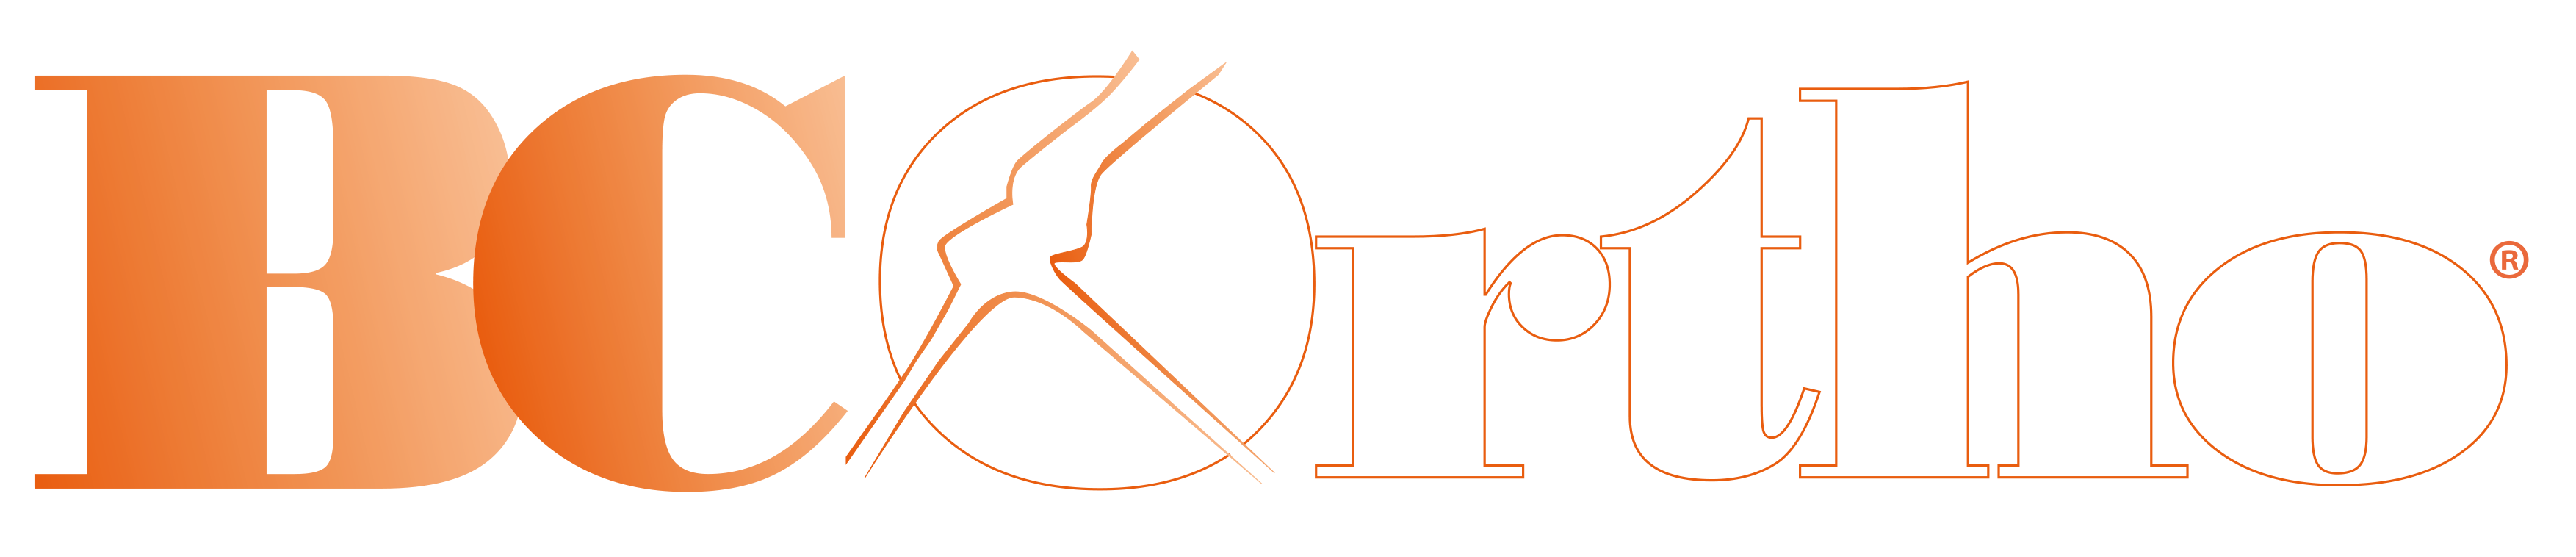 Logo corporativo marca de productos de ortopedia BC Ortho